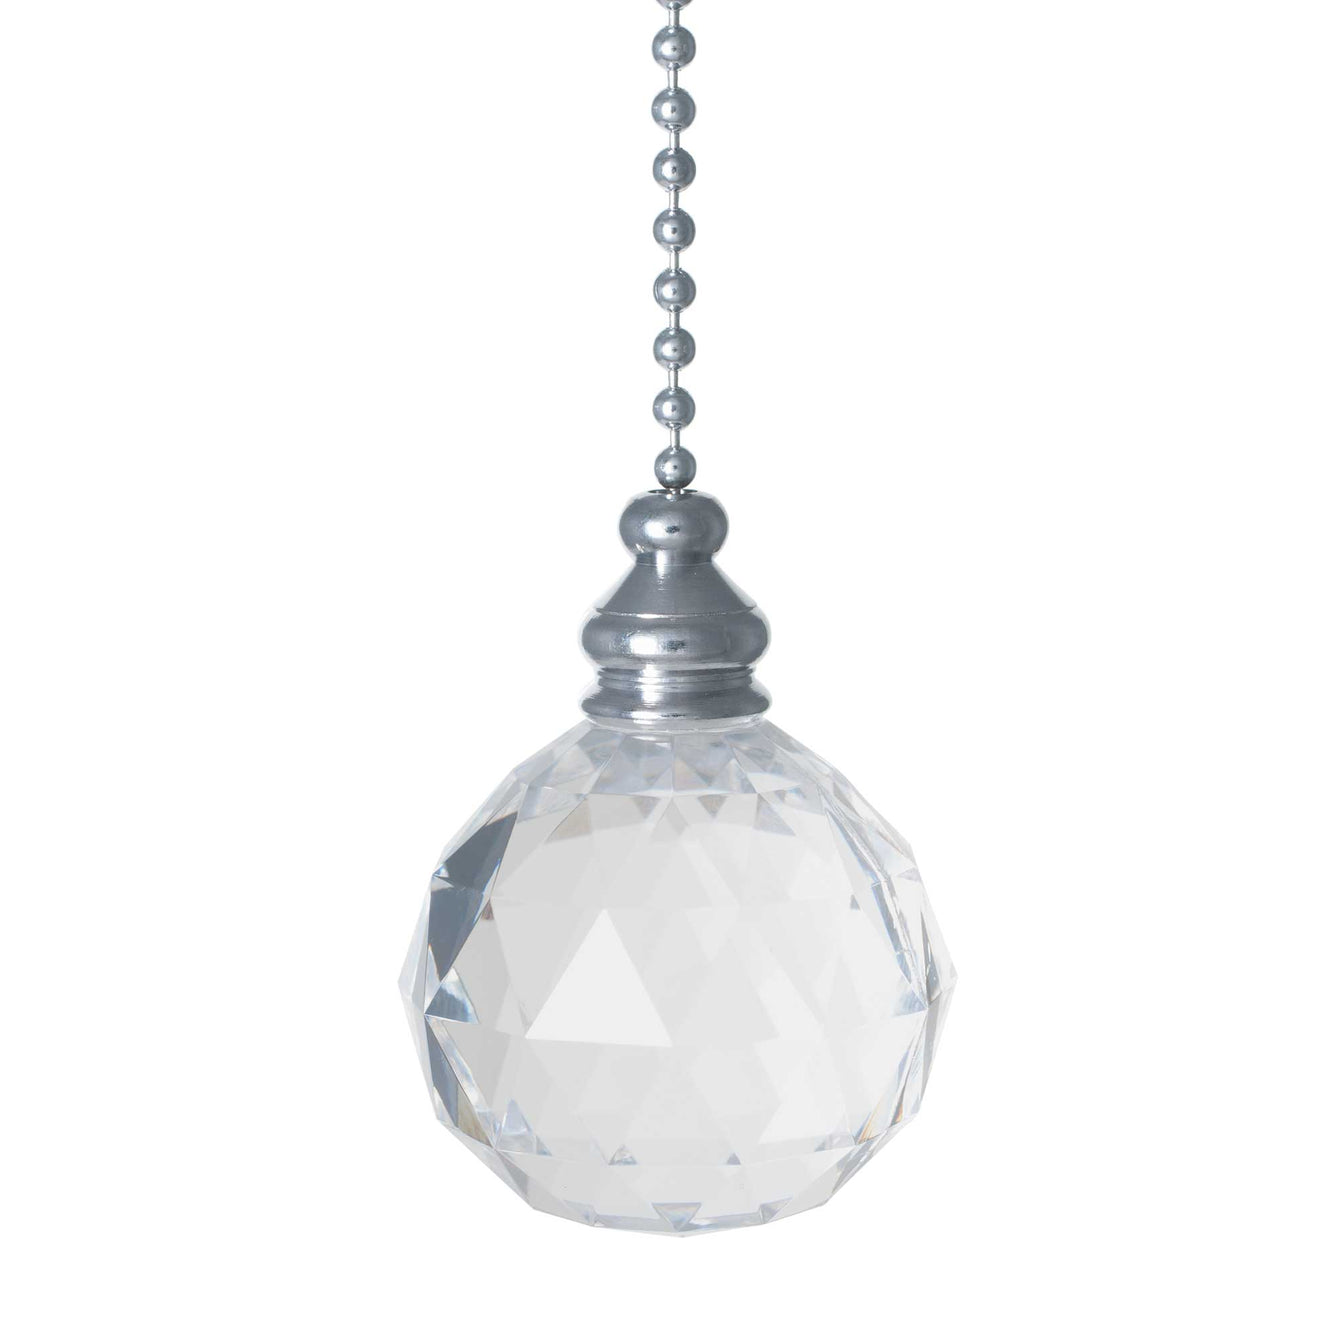 ElekTek Light Pull Chain Acrylic Crystal Ball With 80cm Matching Chain Chrome / Black Crystal